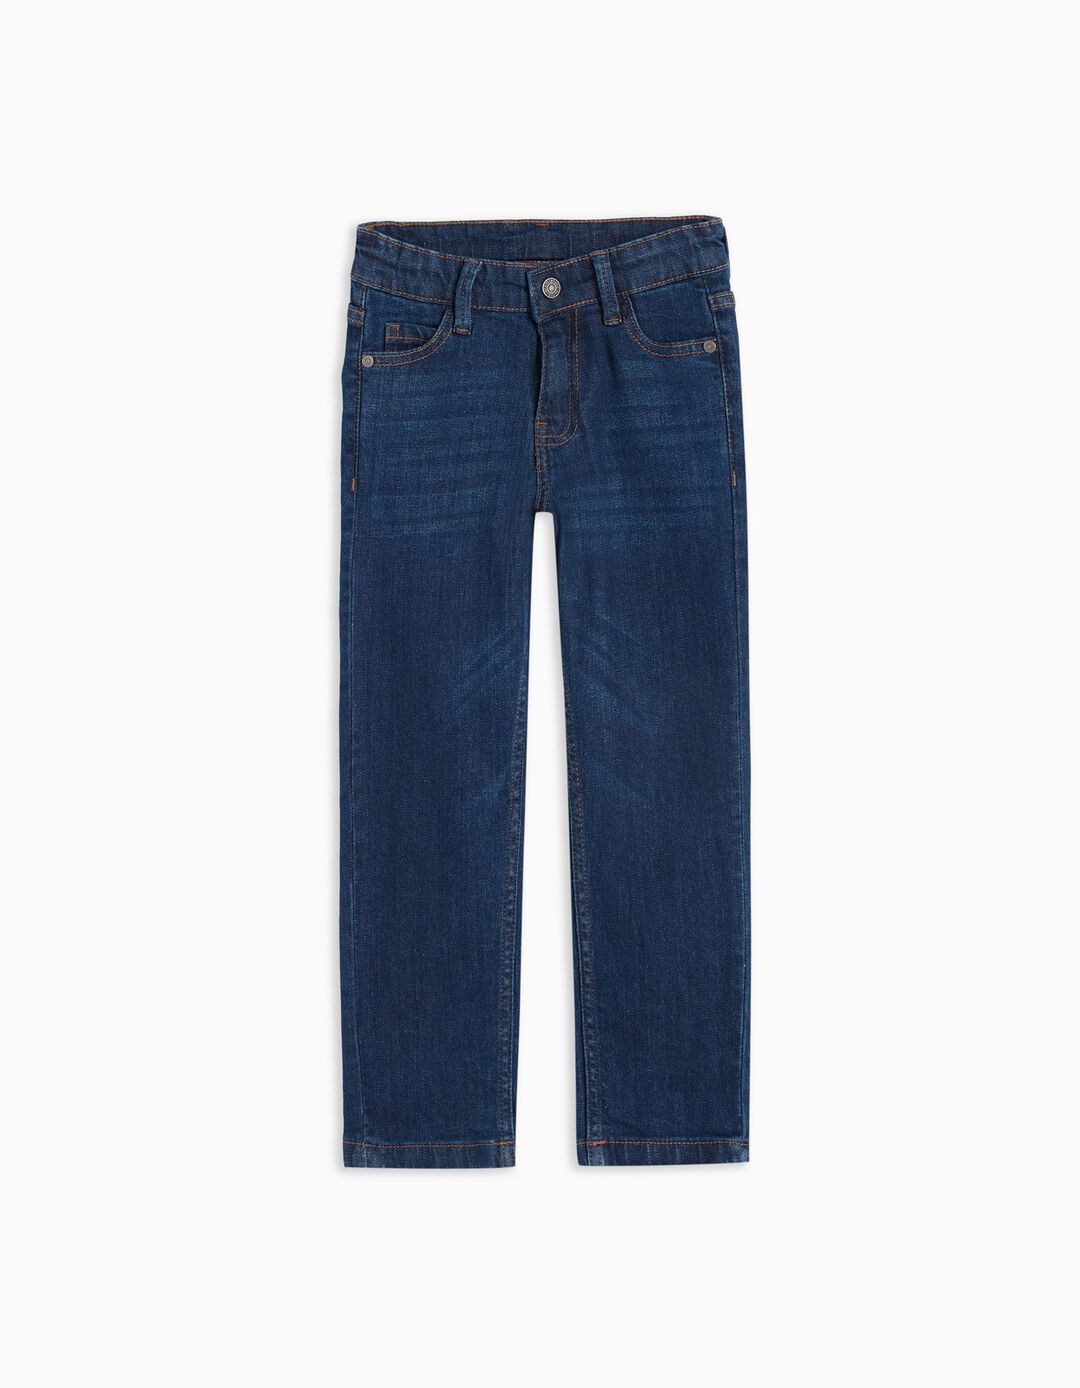 'Regular Fit' Jeans, Boy, Dark Blue